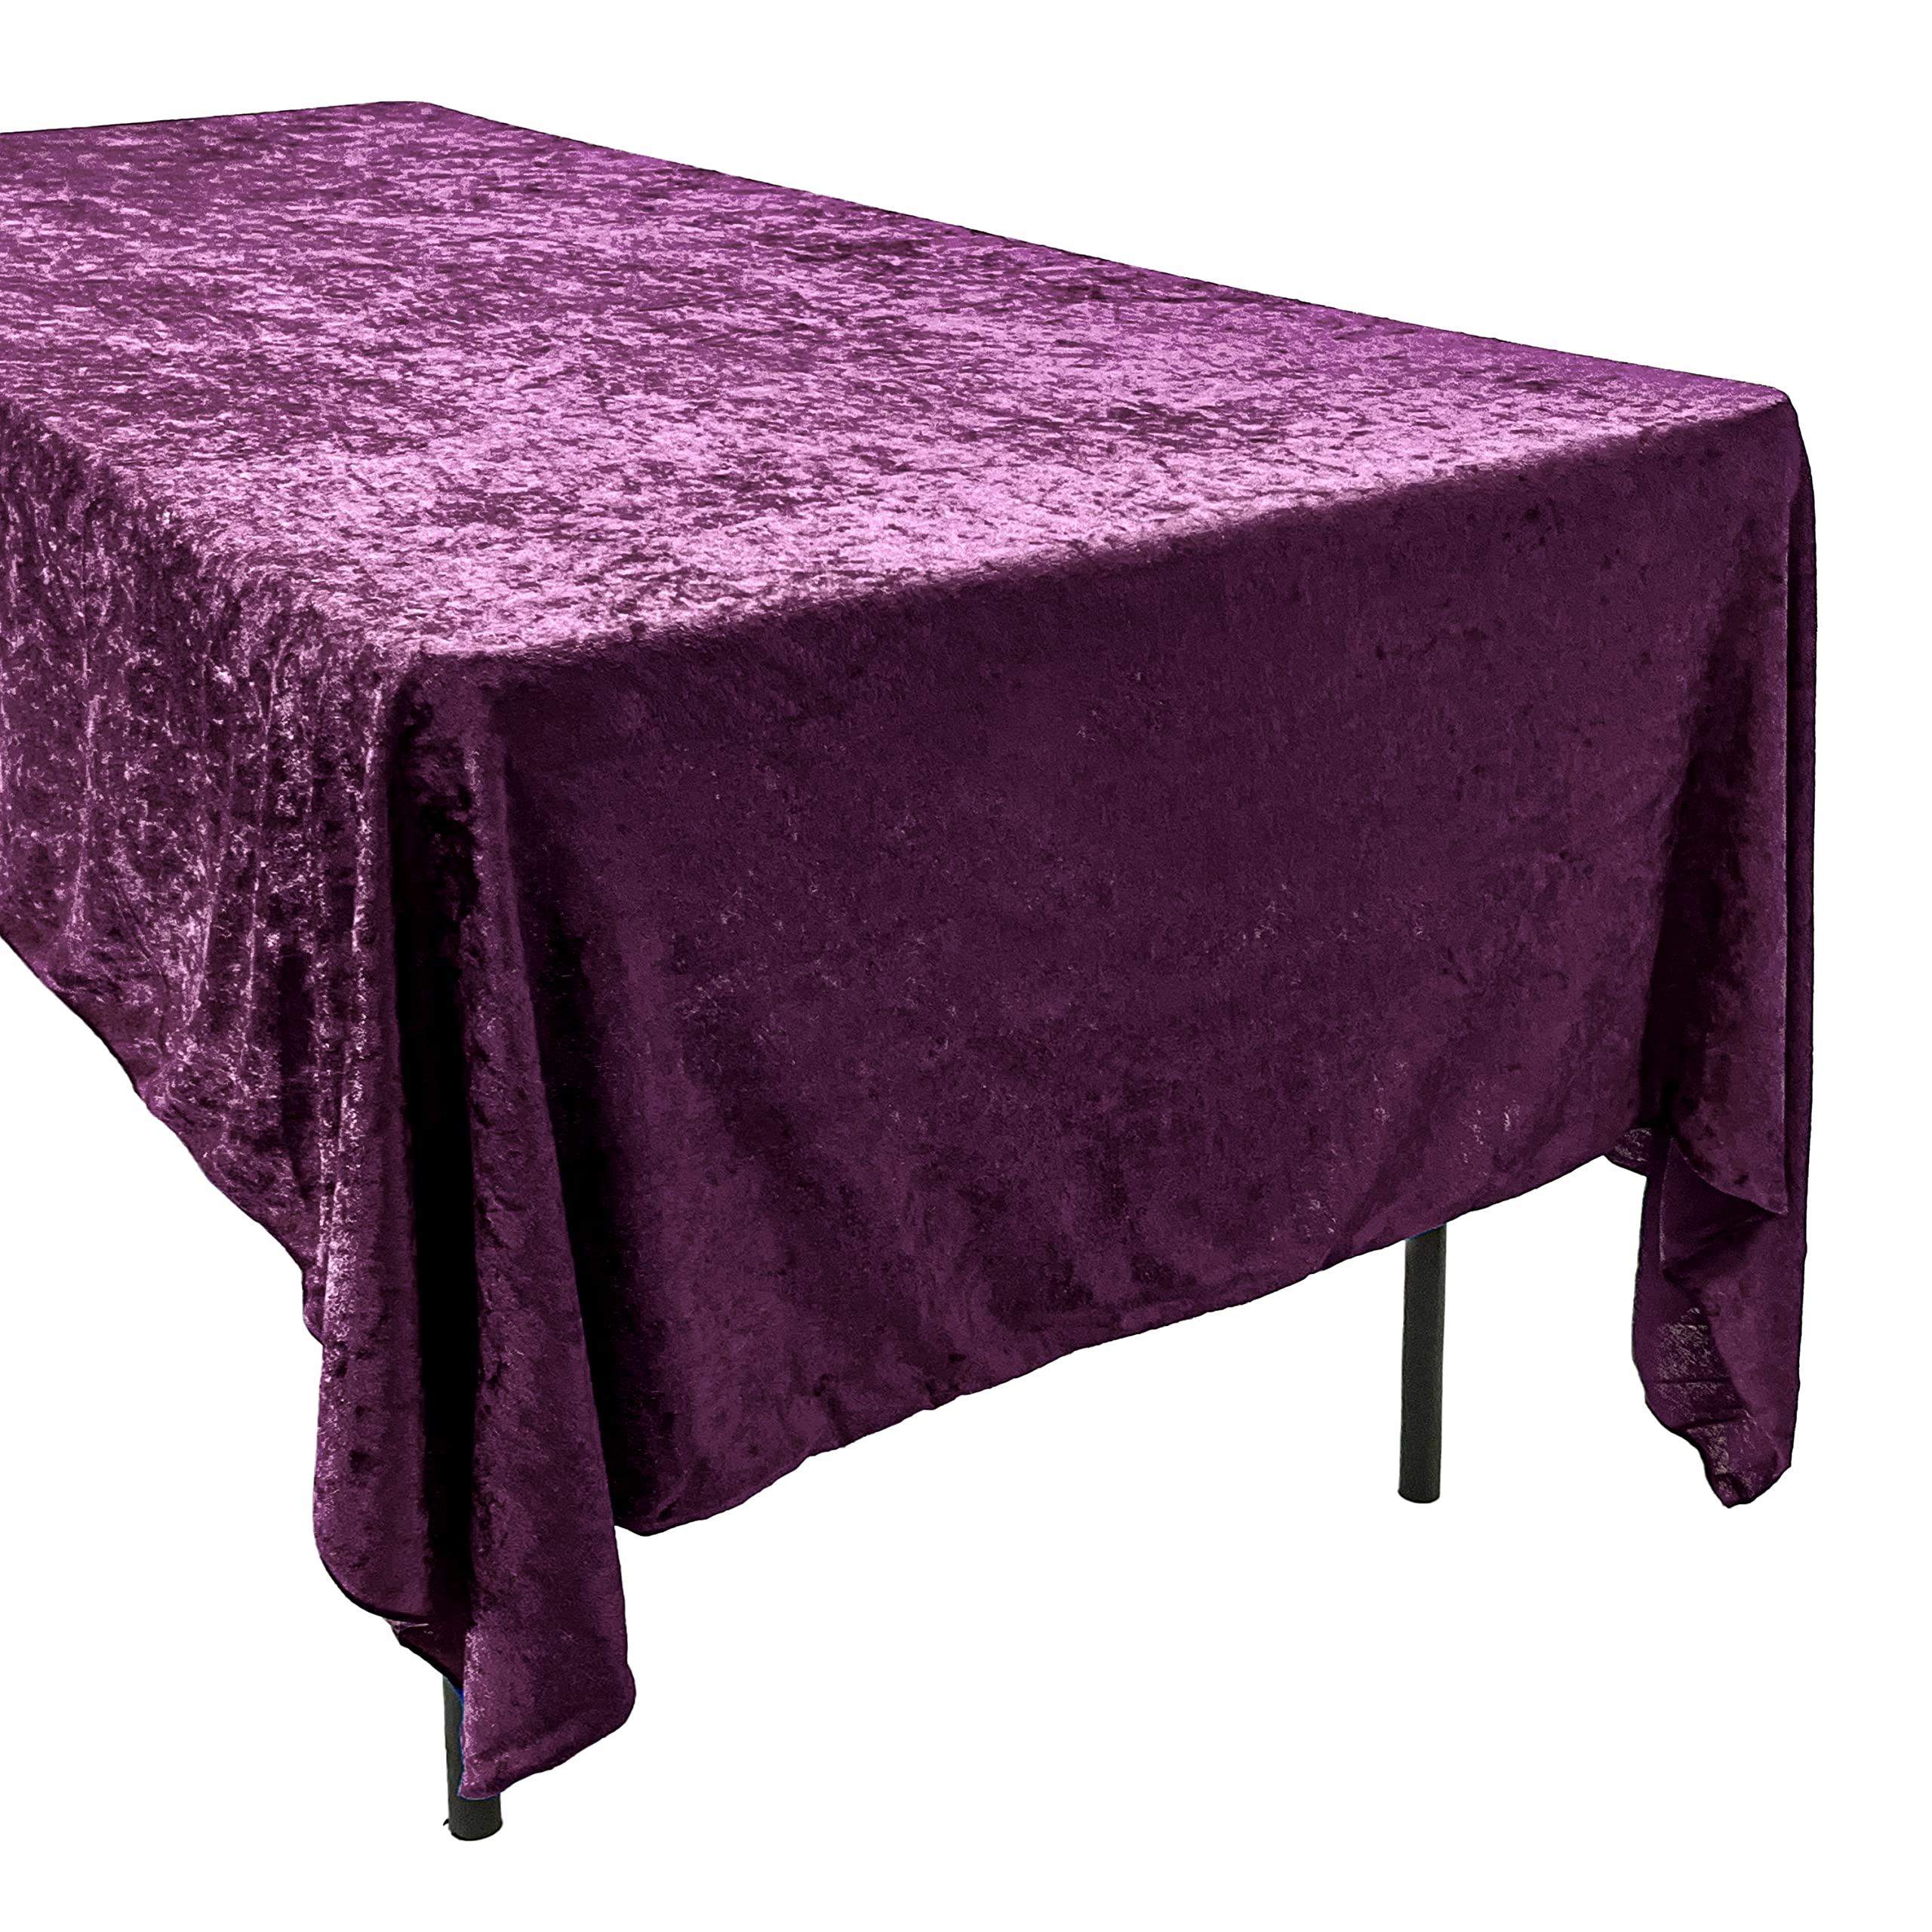 AK TRADING CO. Lush Panne Velvet Tablecloth - 60 x 102 Inch Rectangular Table, Plum